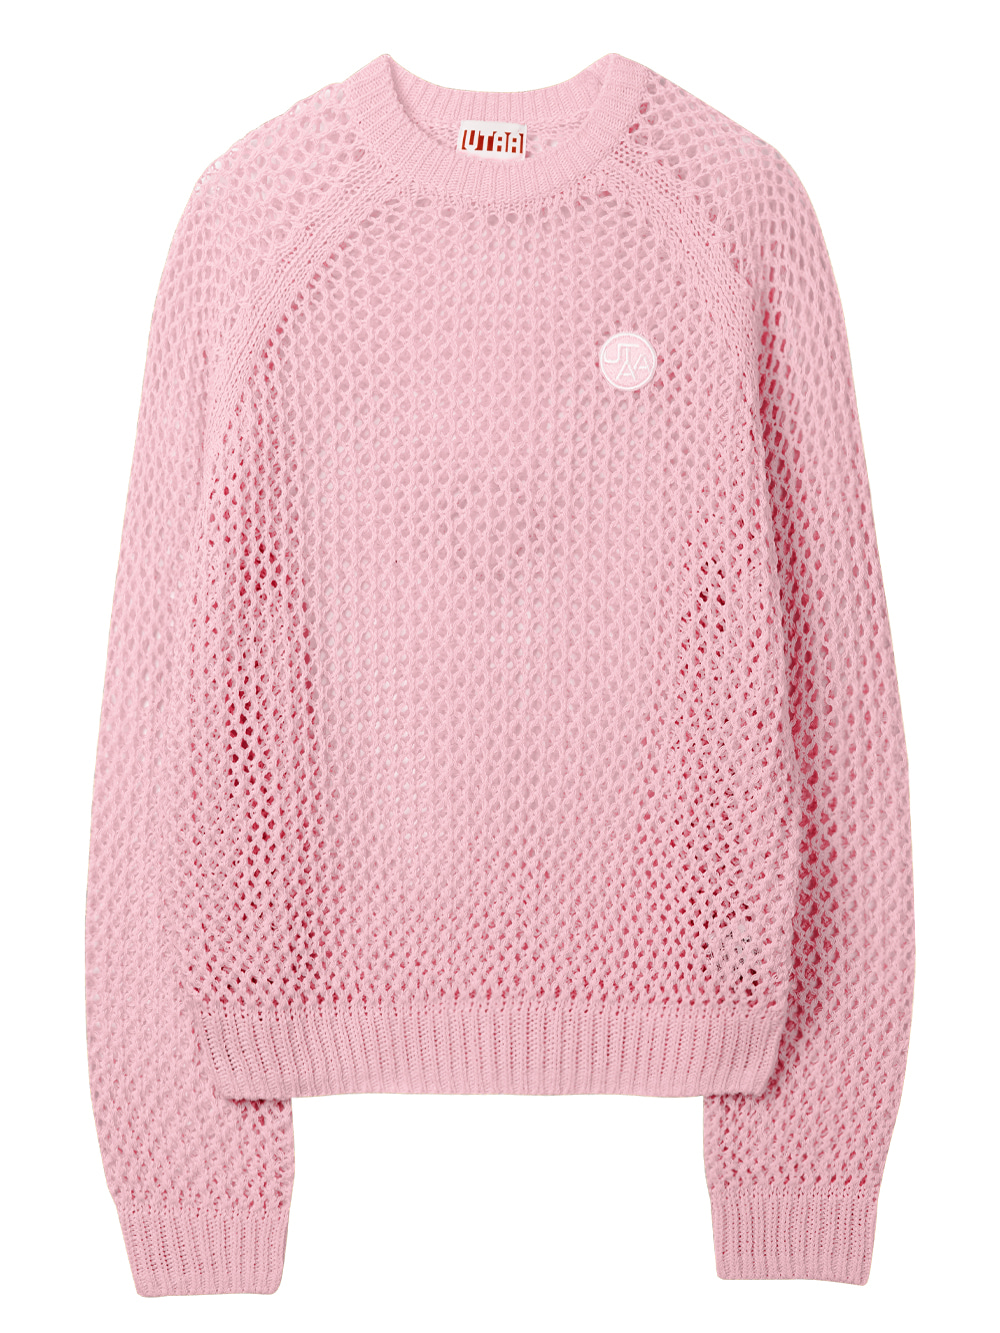 UTAA Crocher Scasi Raglan Knit : Pink (UB2KTF254PK)